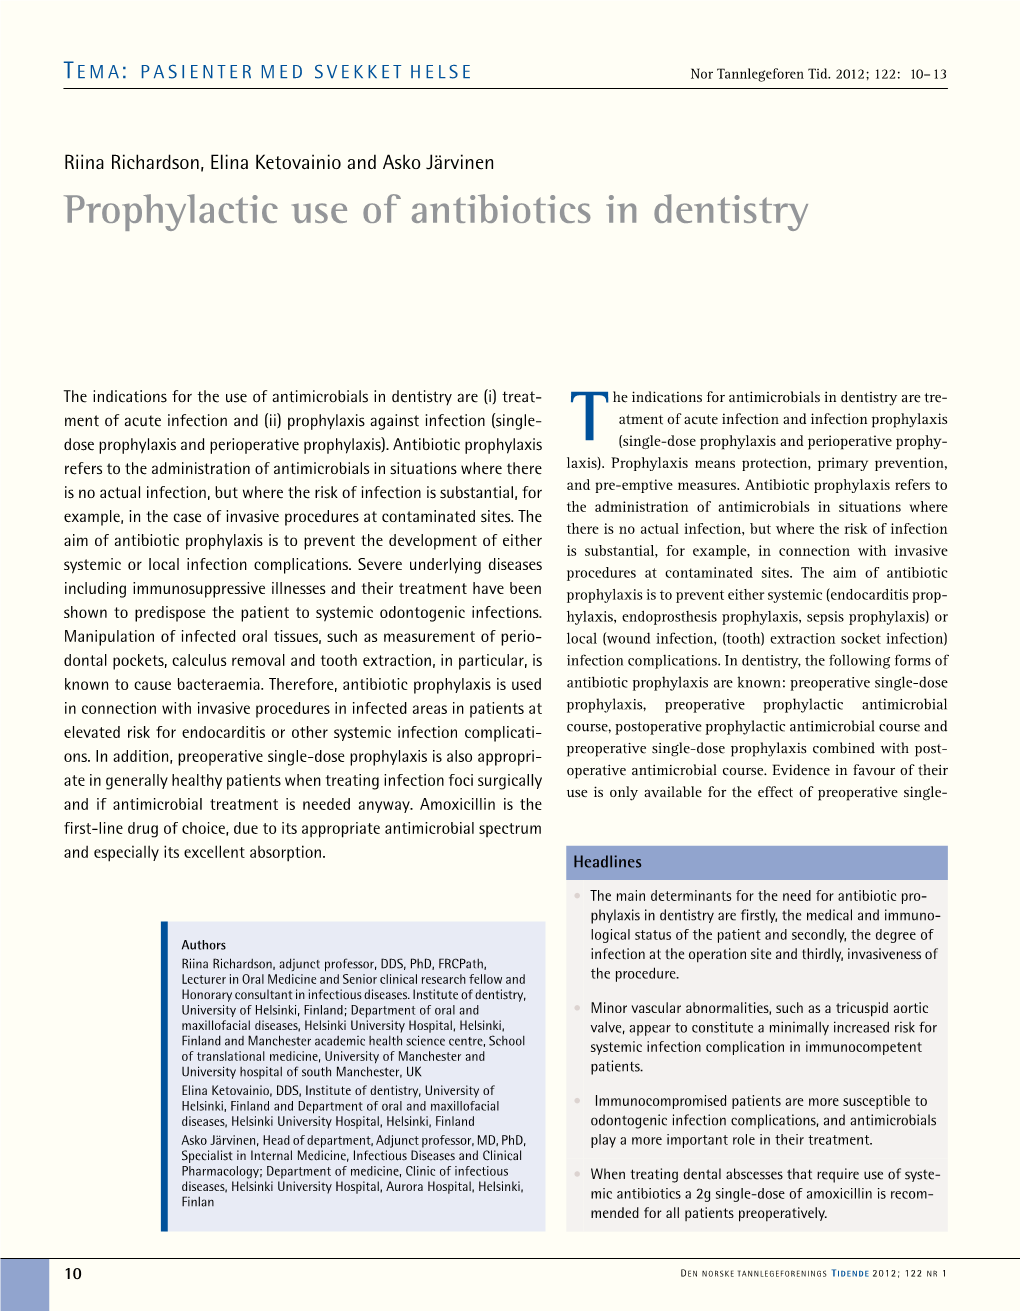 Prophylactic Use of Antibiotics in Dentistry